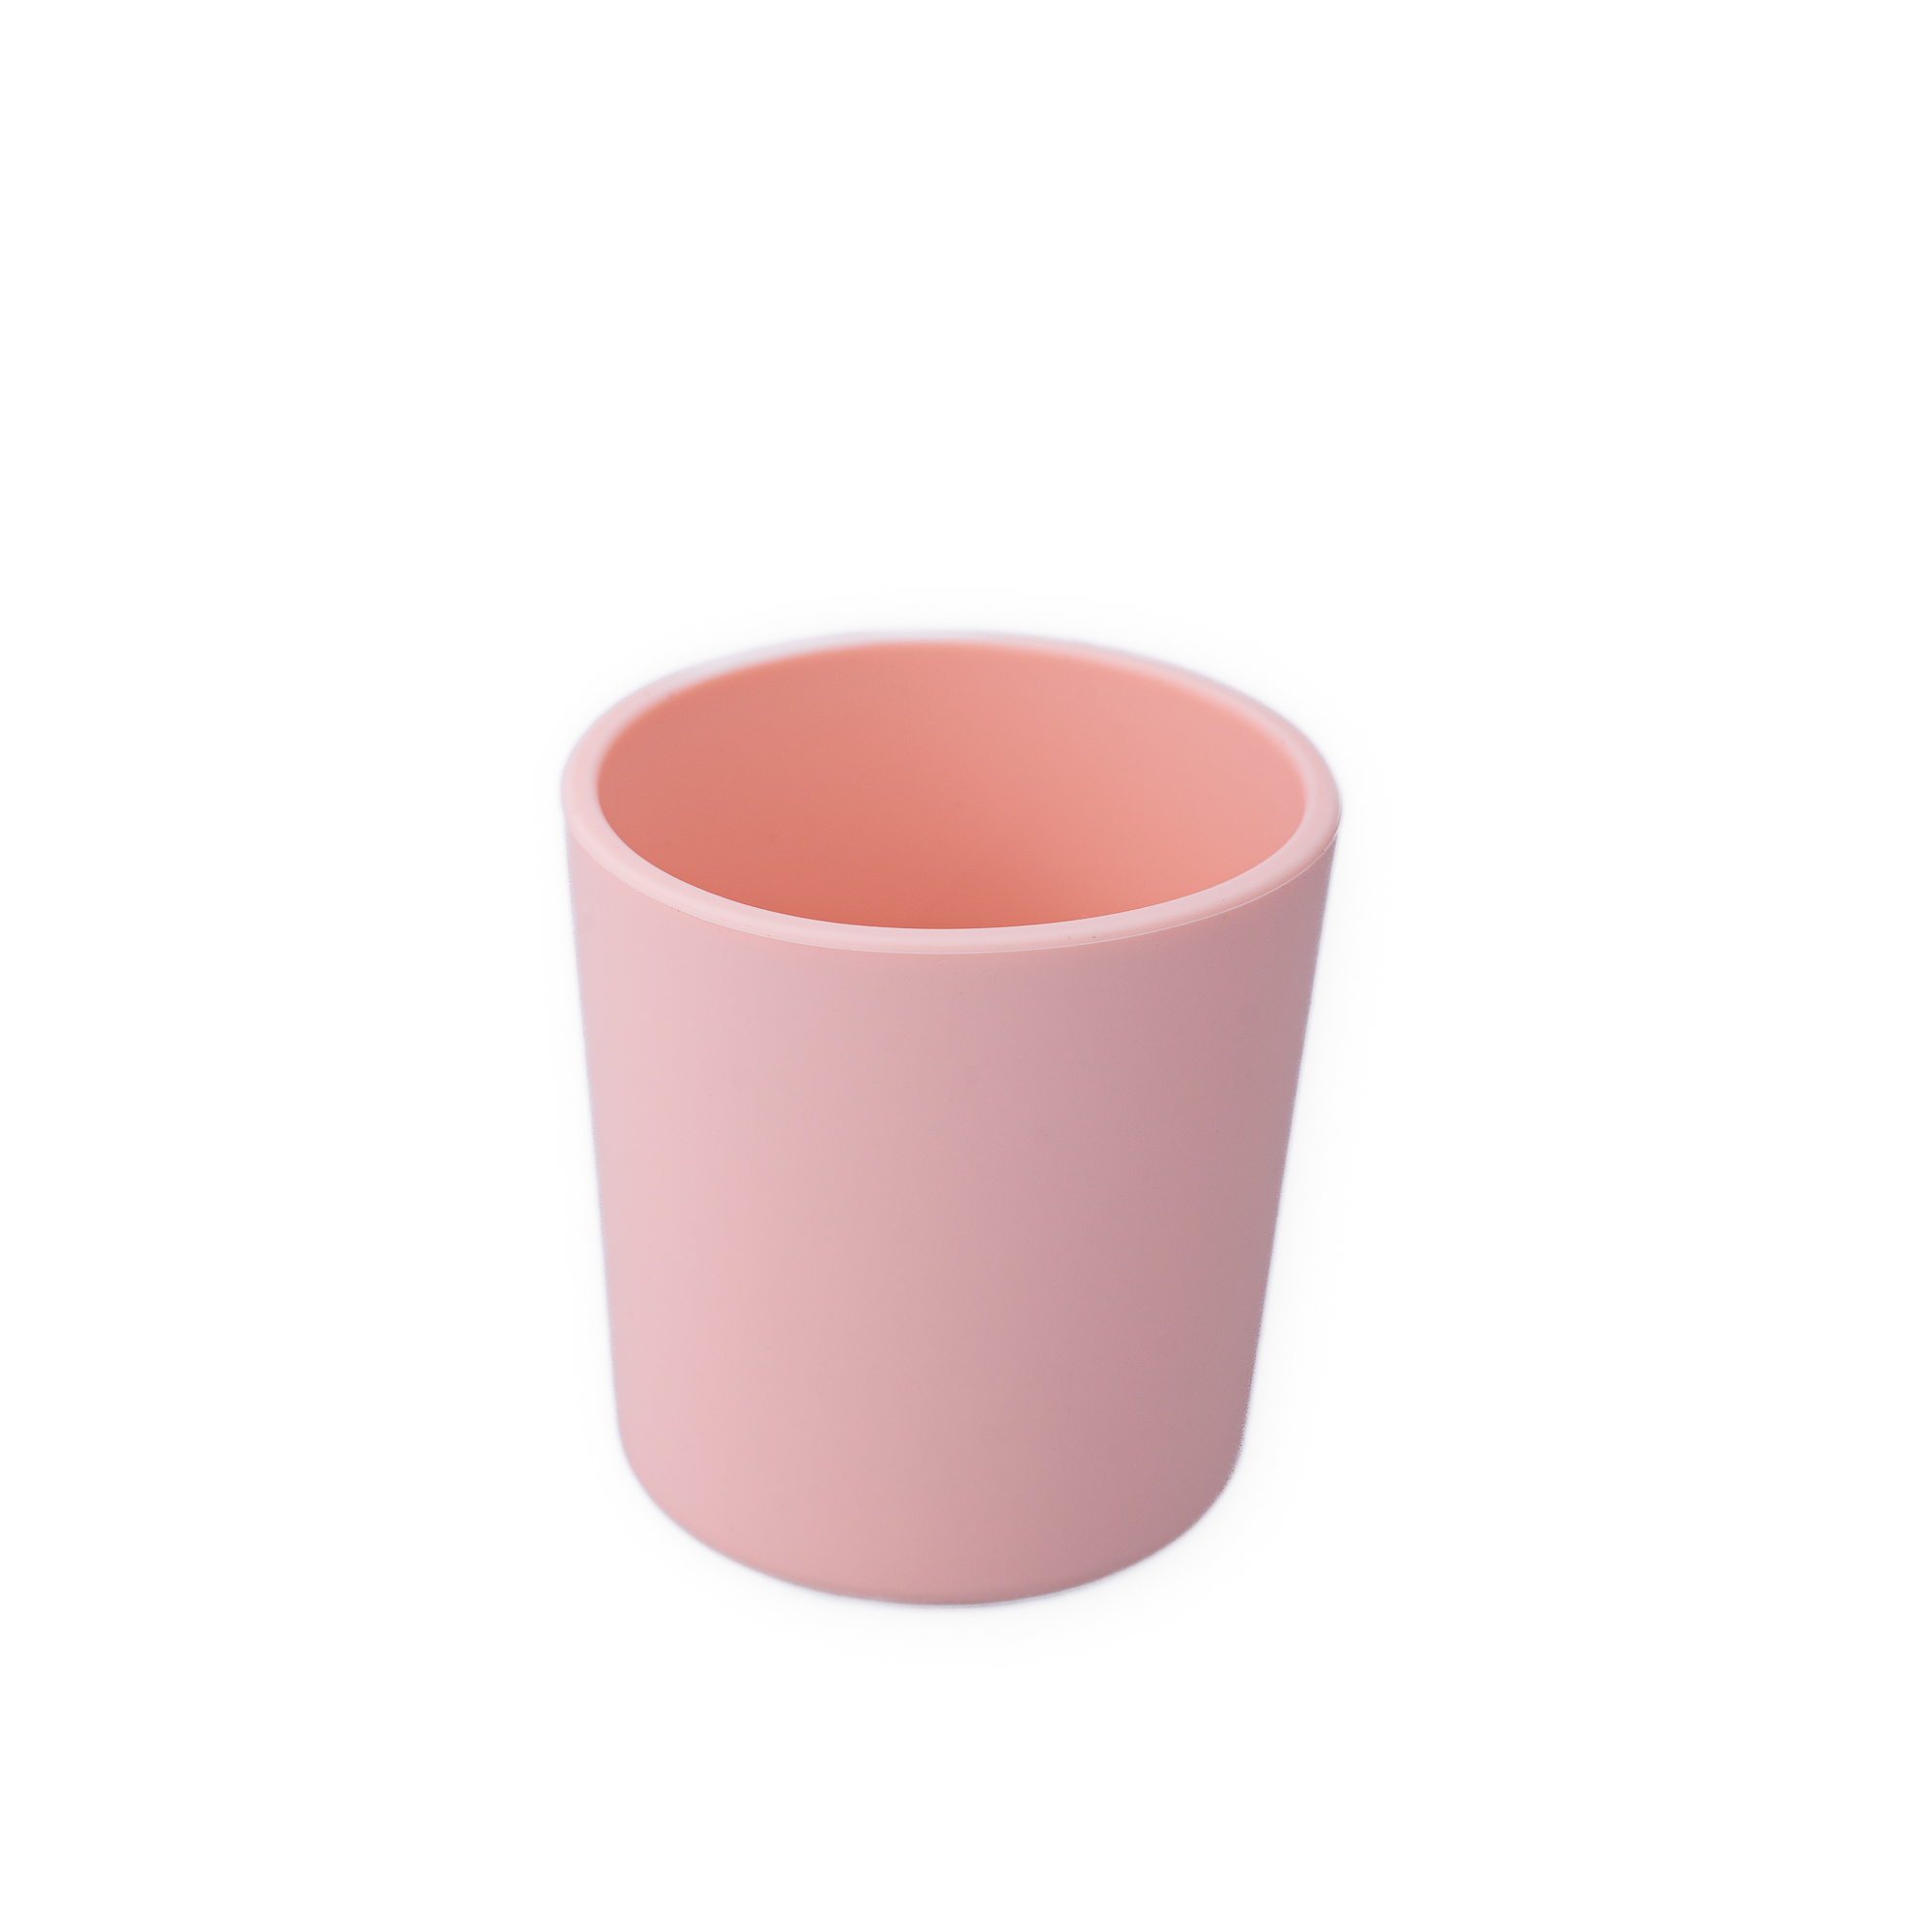 Pahar din silicon pentru copii, Roz Pal, 180 ml, Oaki